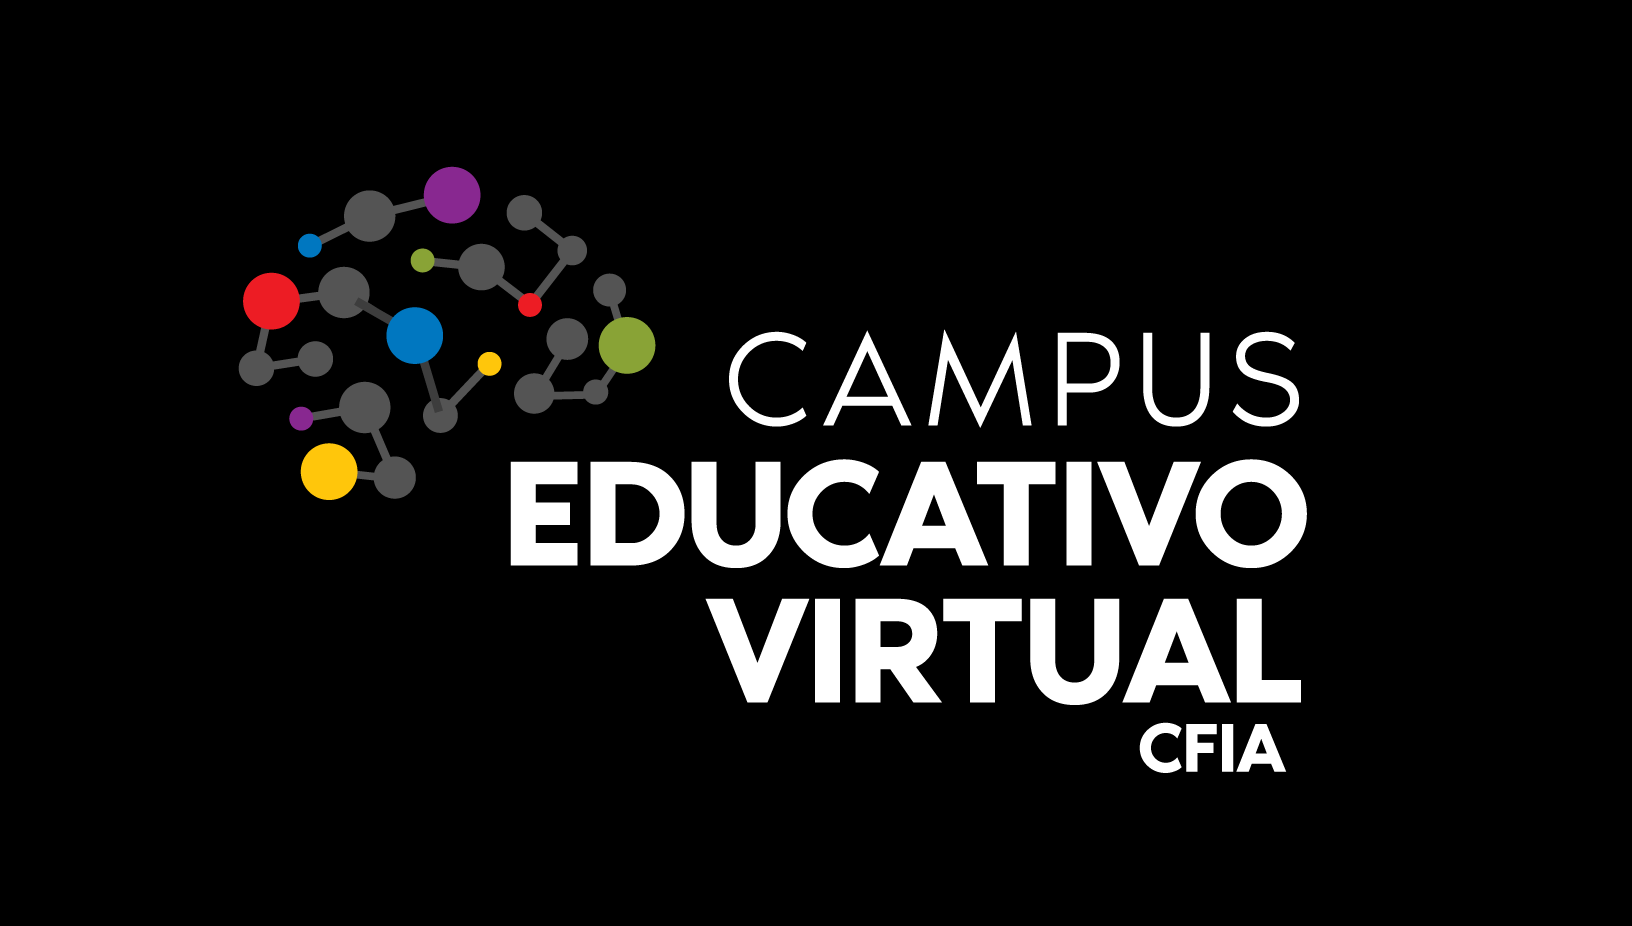 Campus Educativo Virtual - CFIA